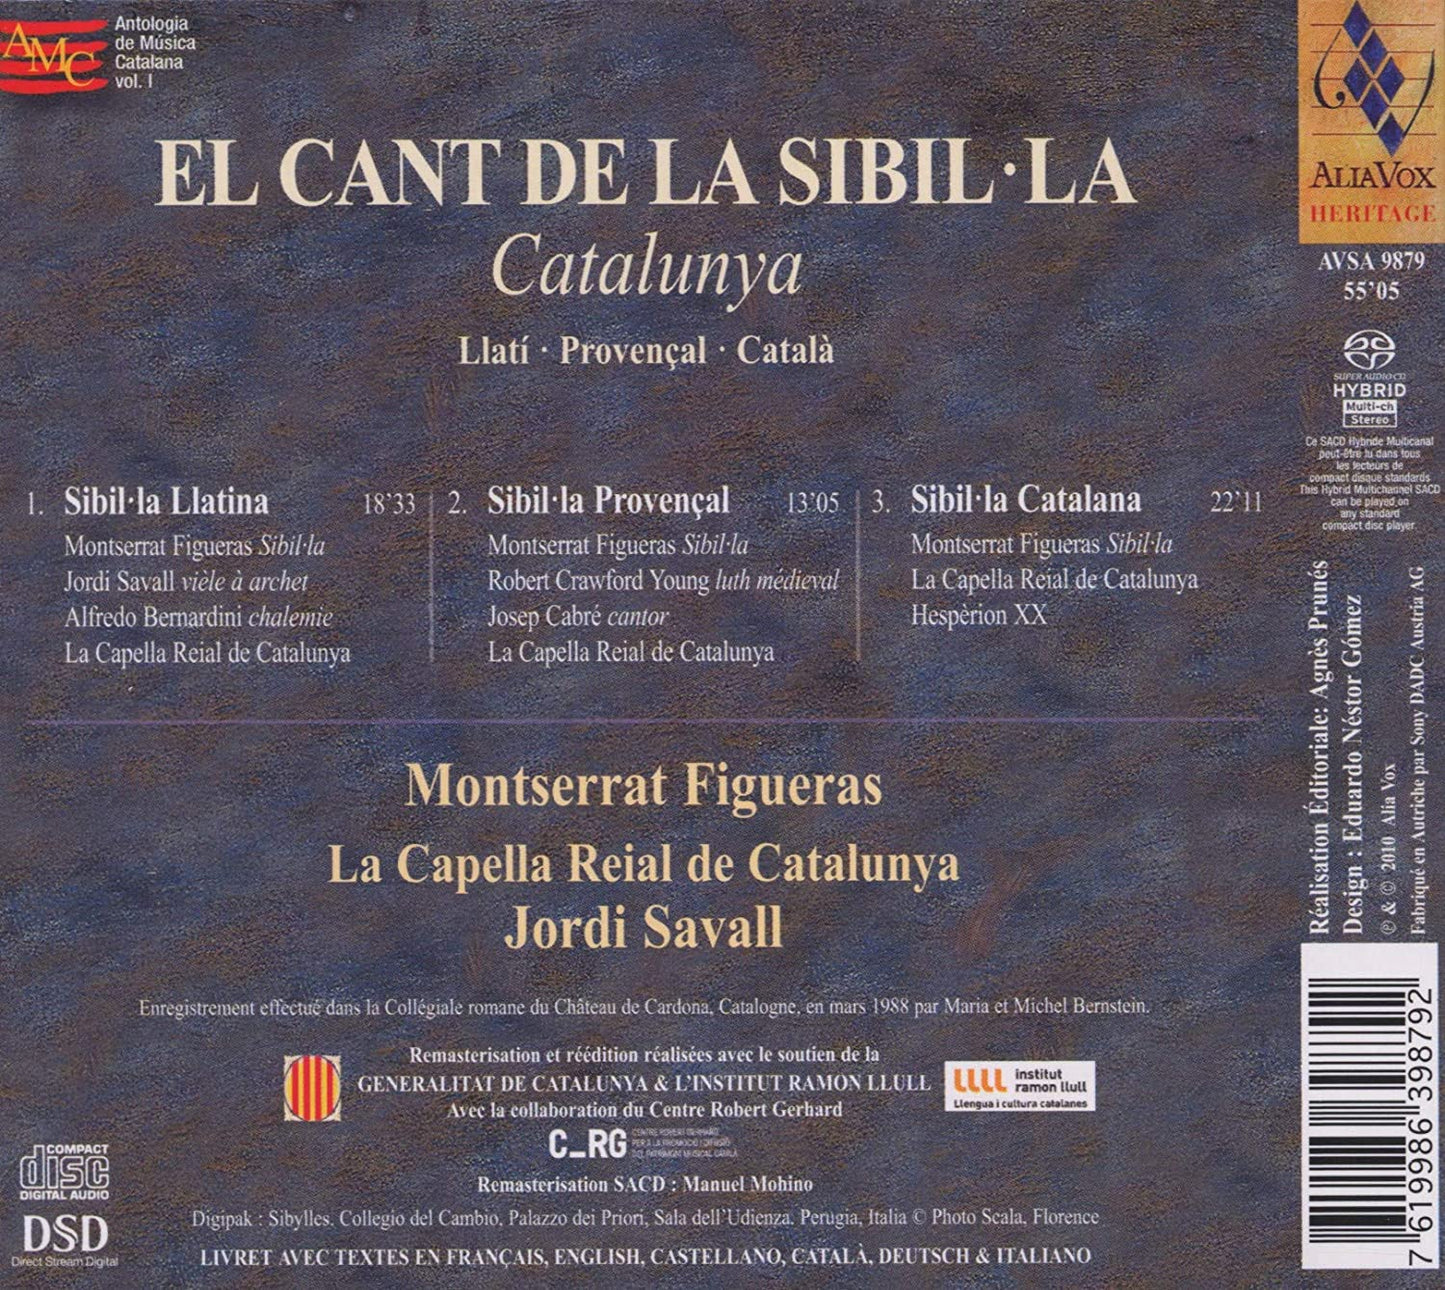 EL CANT DE LA SIBIL-LA - FIGUERAS, CAPELLA REIAL DE CATALUNYA, SAVALL (Hybrid SACD)